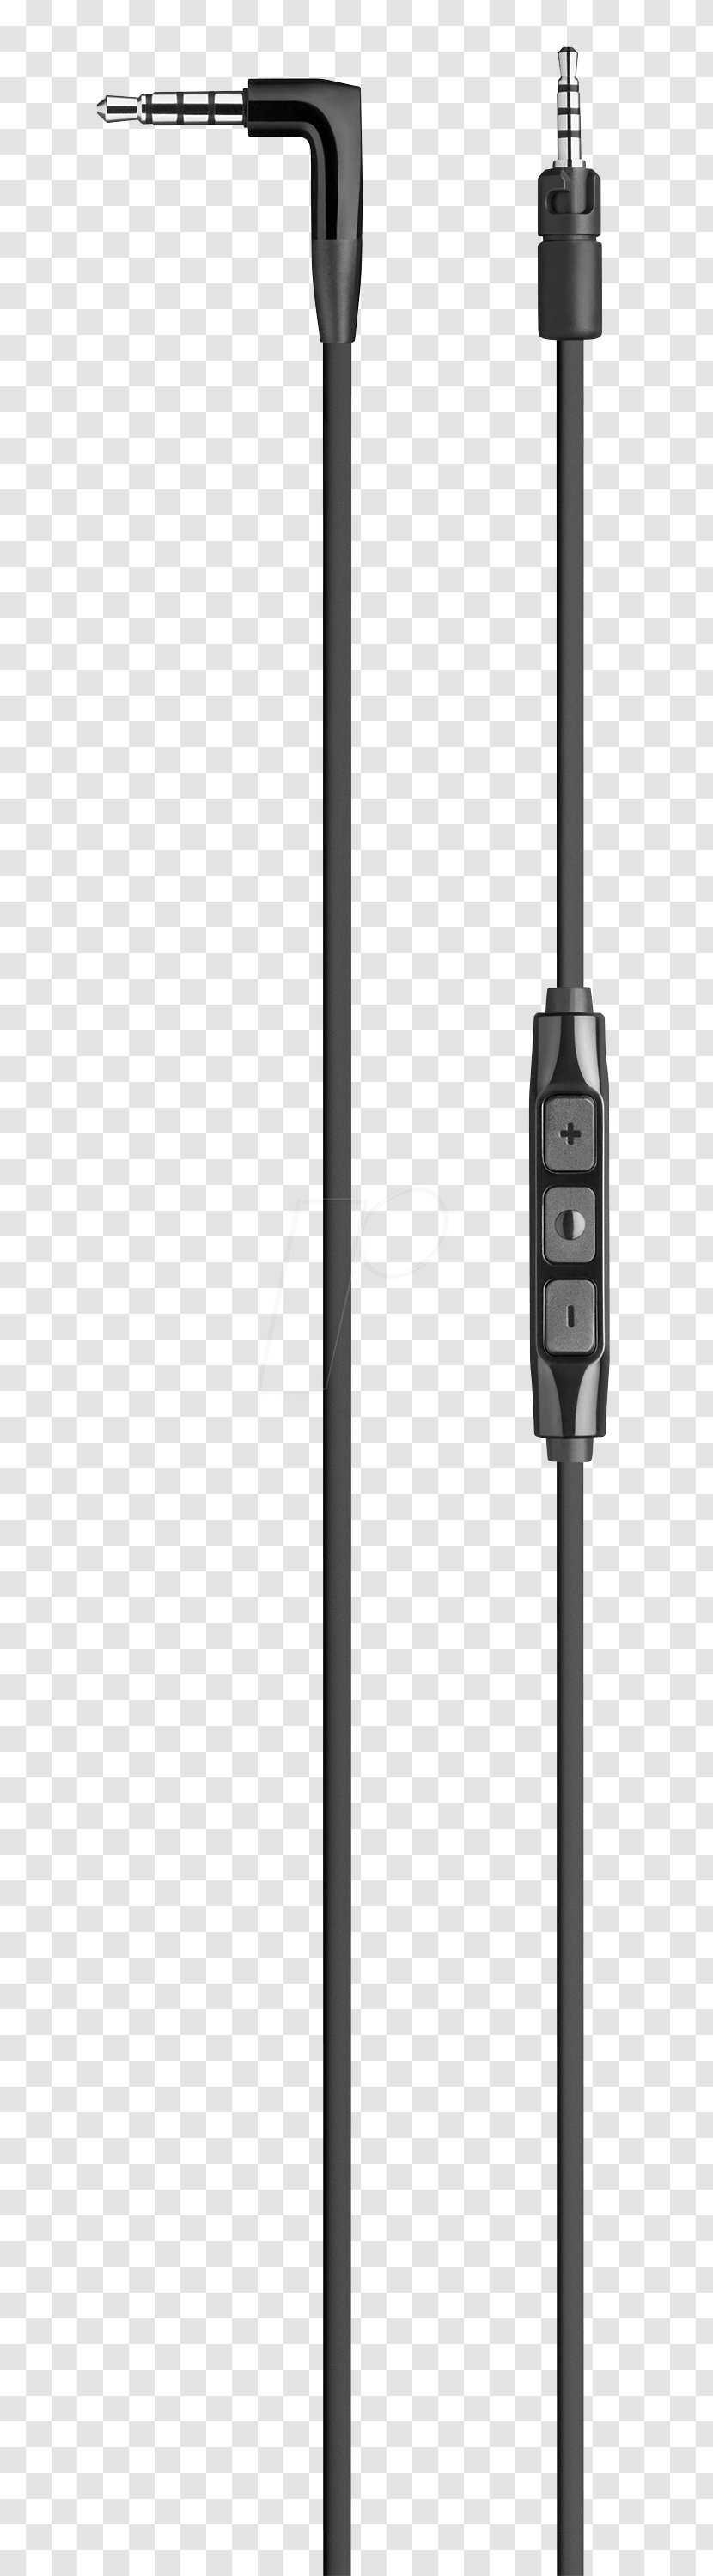 Sennheiser HD 2.20s Electrical Cable Headphones Amazon.com Remote Controls Transparent PNG